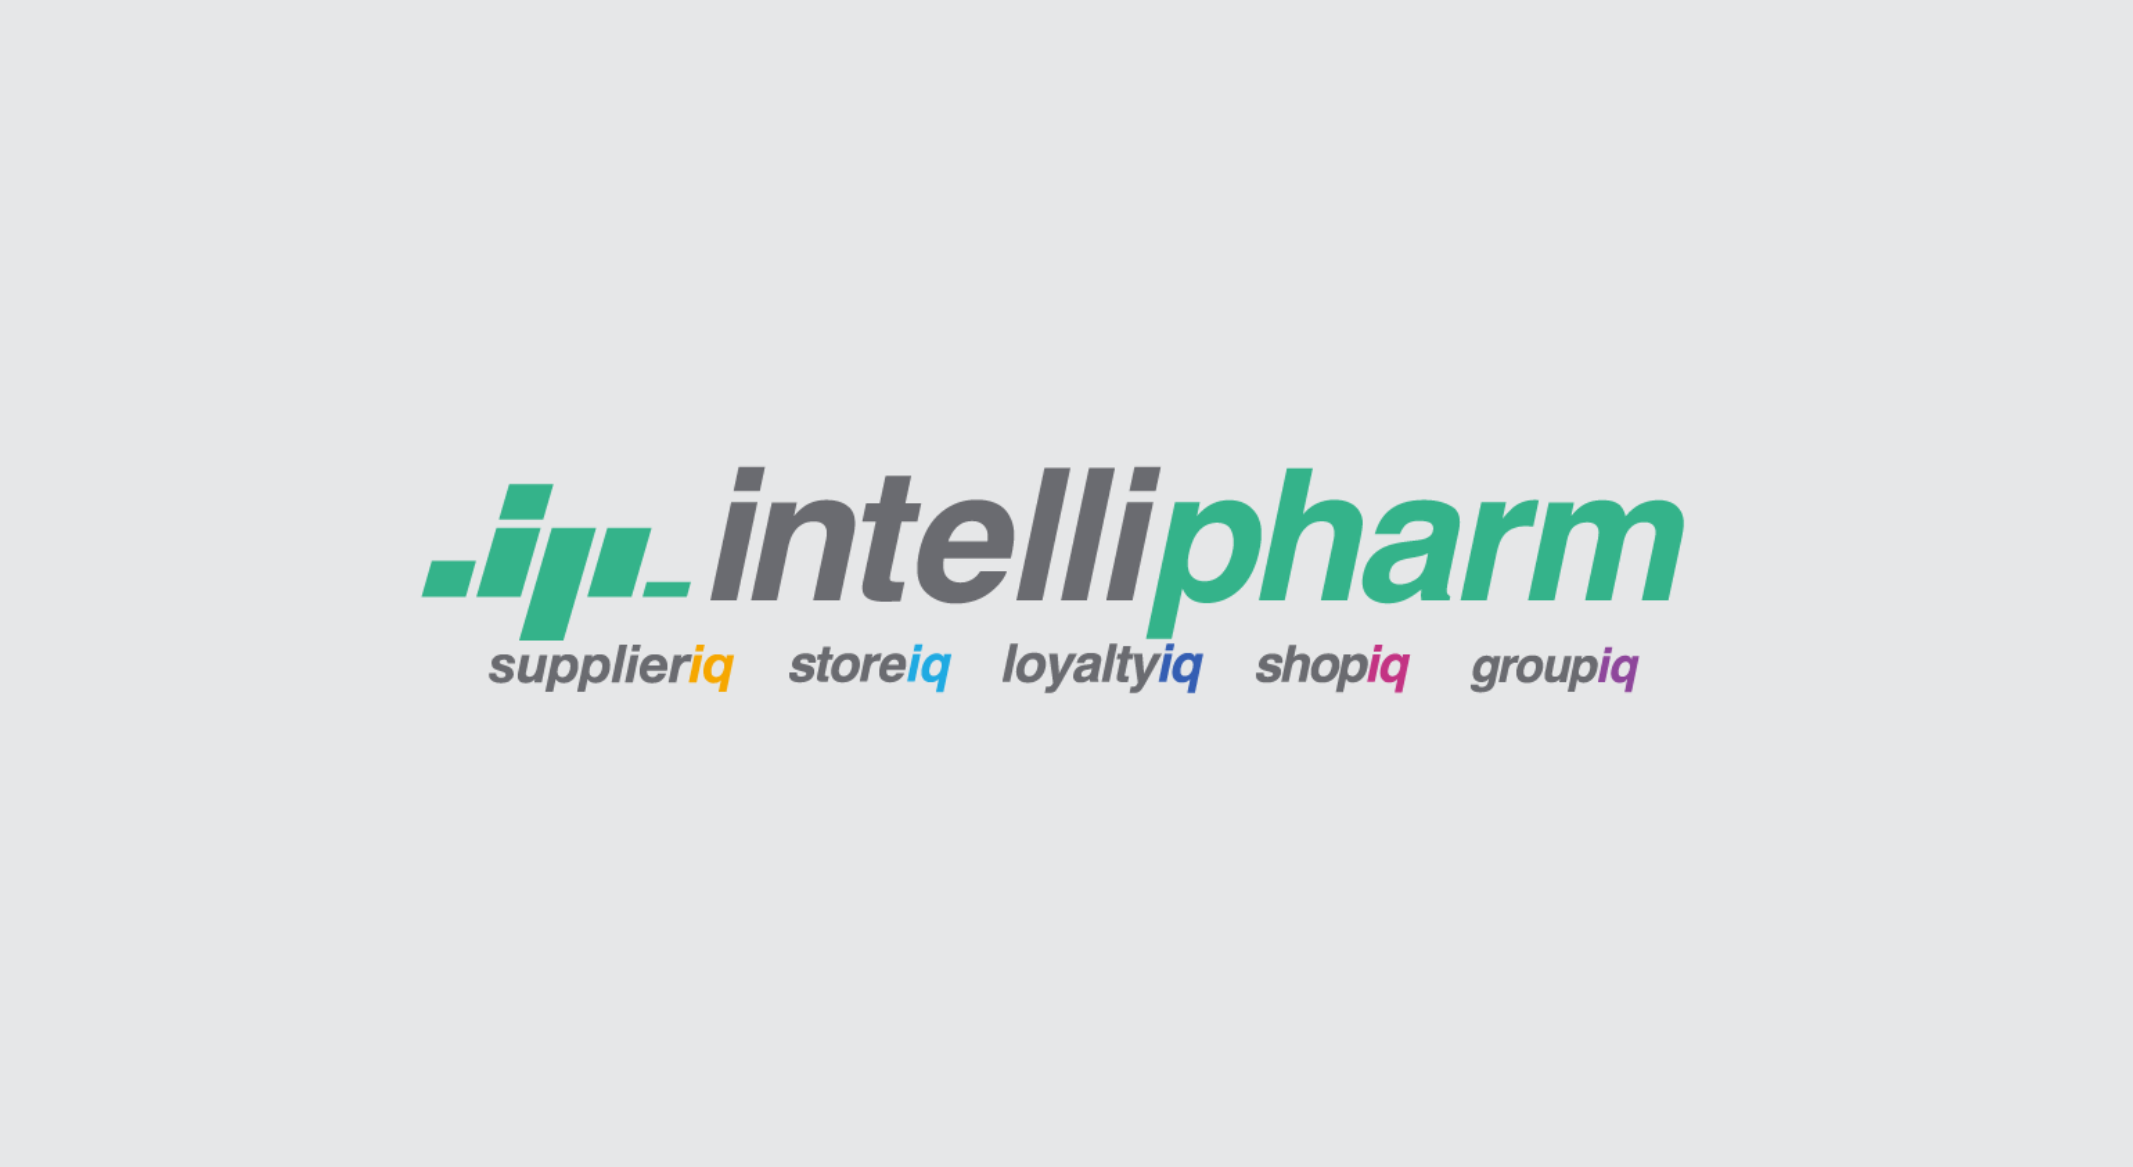 Intellipharm logo